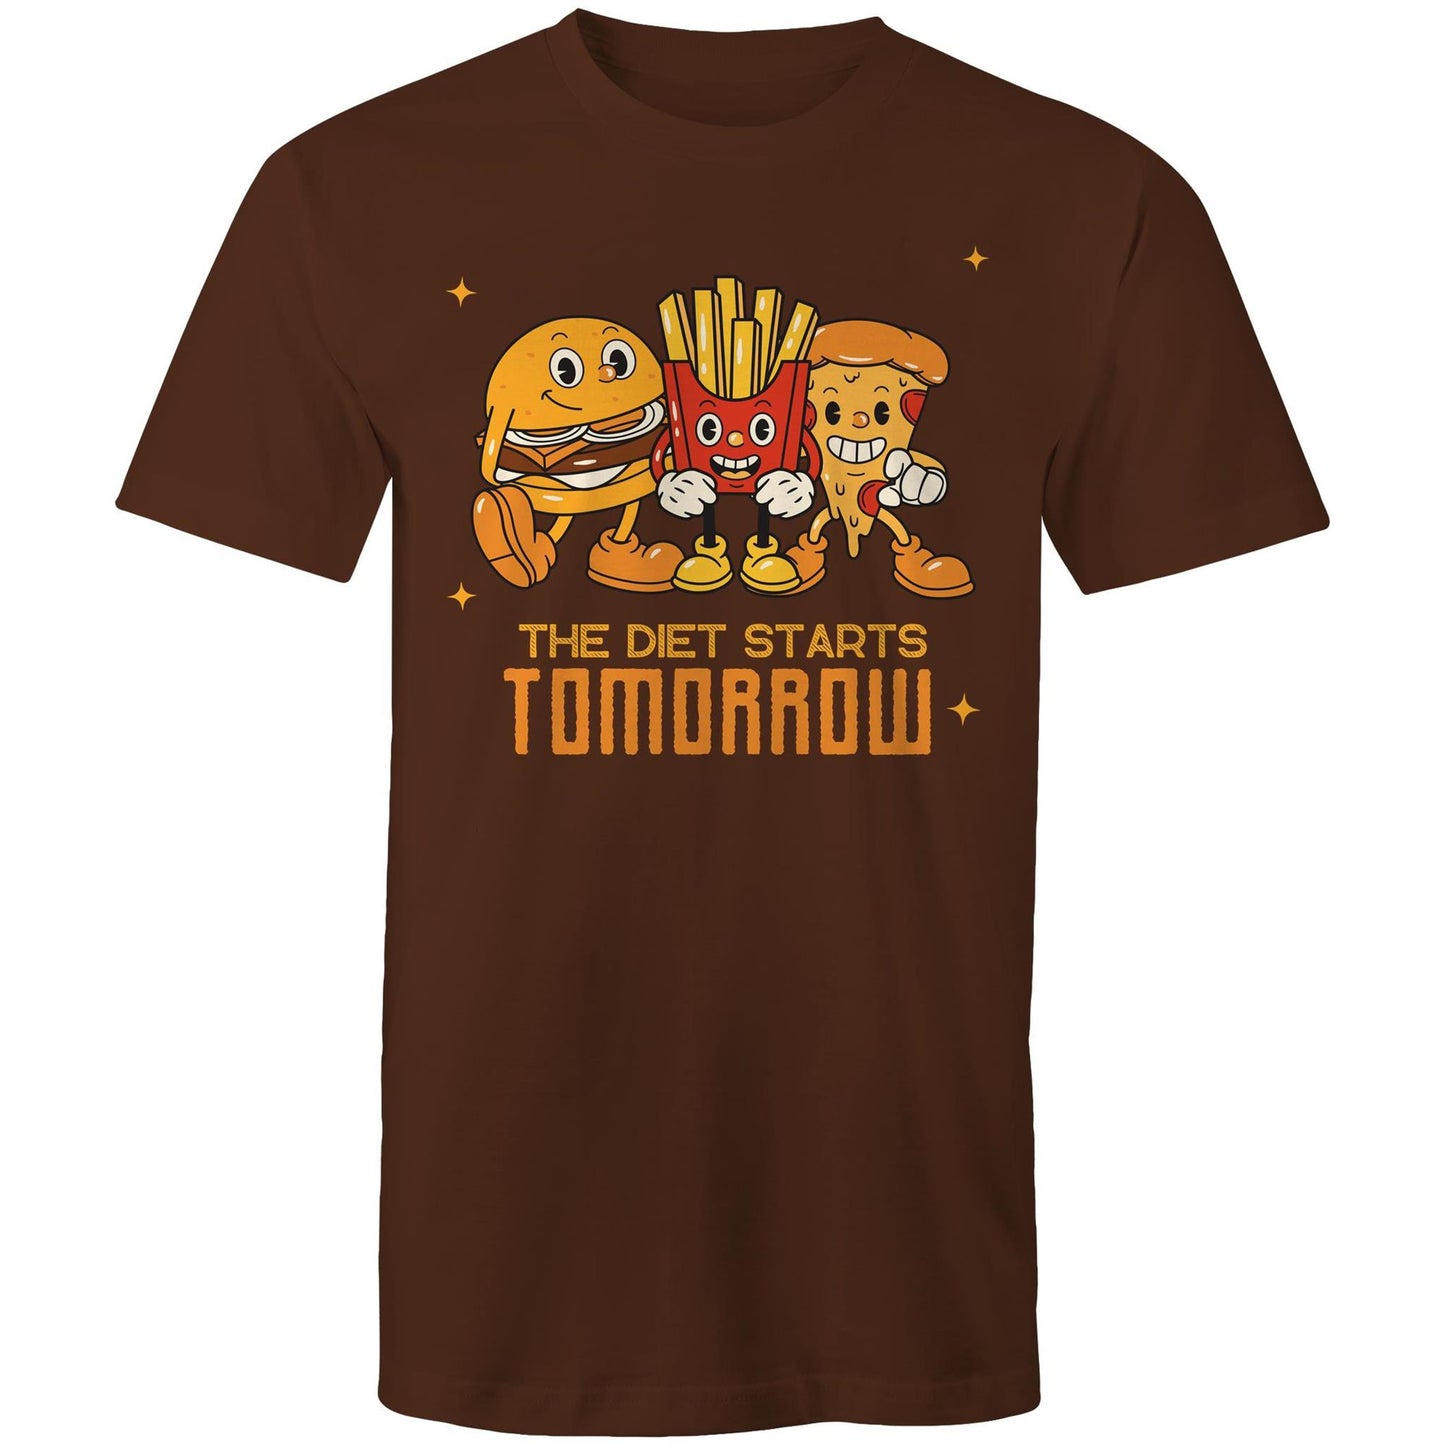 The Diet Starts Tomorrow, Hamburger, Pizza, Fries - Mens T-Shirt Dark Chocolate Mens T-shirt Food Funny Retro